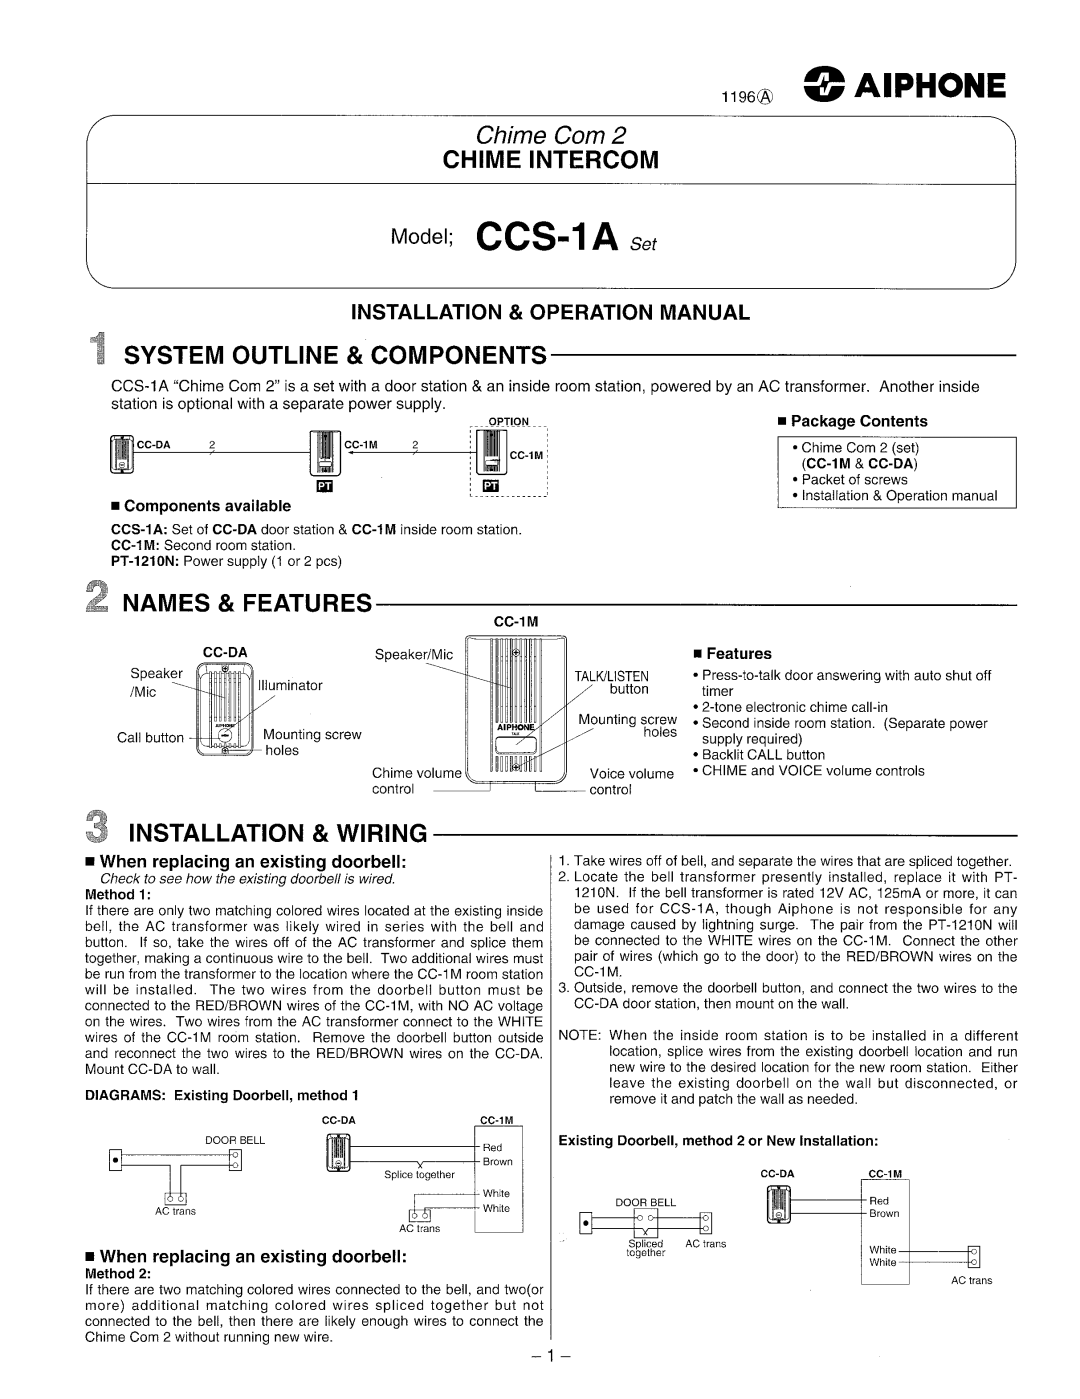 Aiphone CCS-1A manual 